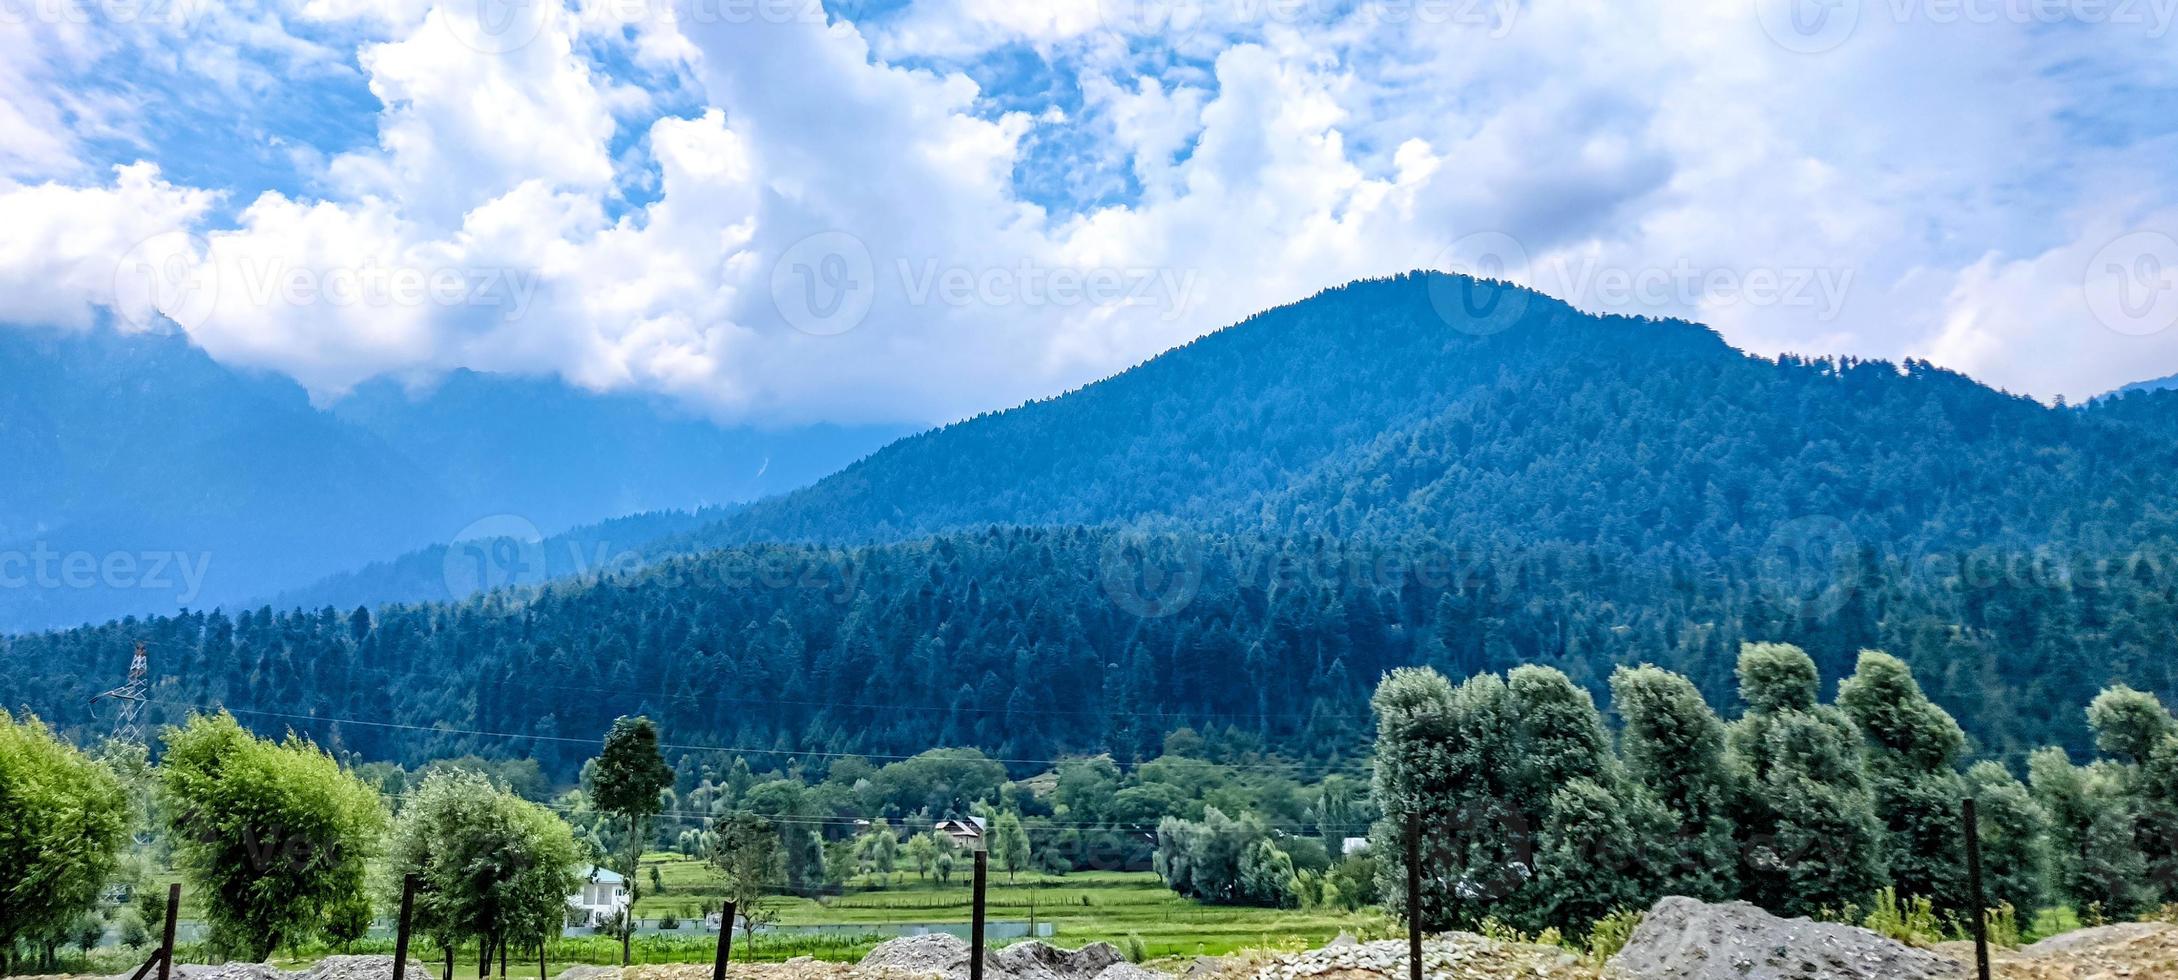 Beautiful mountain and cloudy sky view of Jammu and Kashmir photo